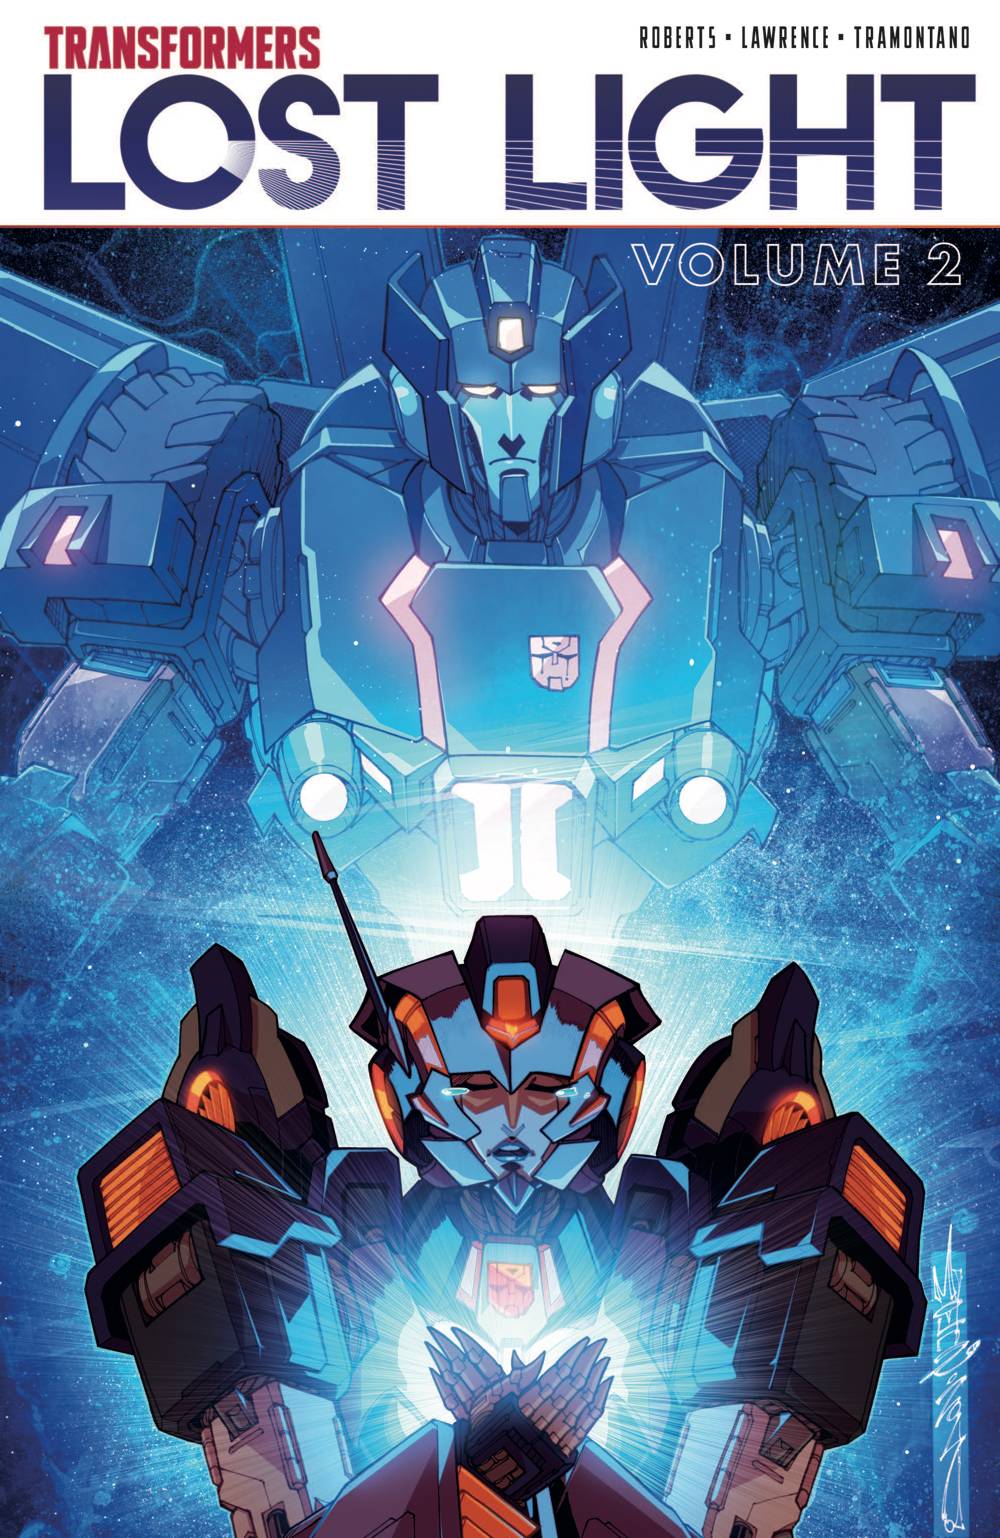 Transformers Lost Light Graphic Novel Volume 2